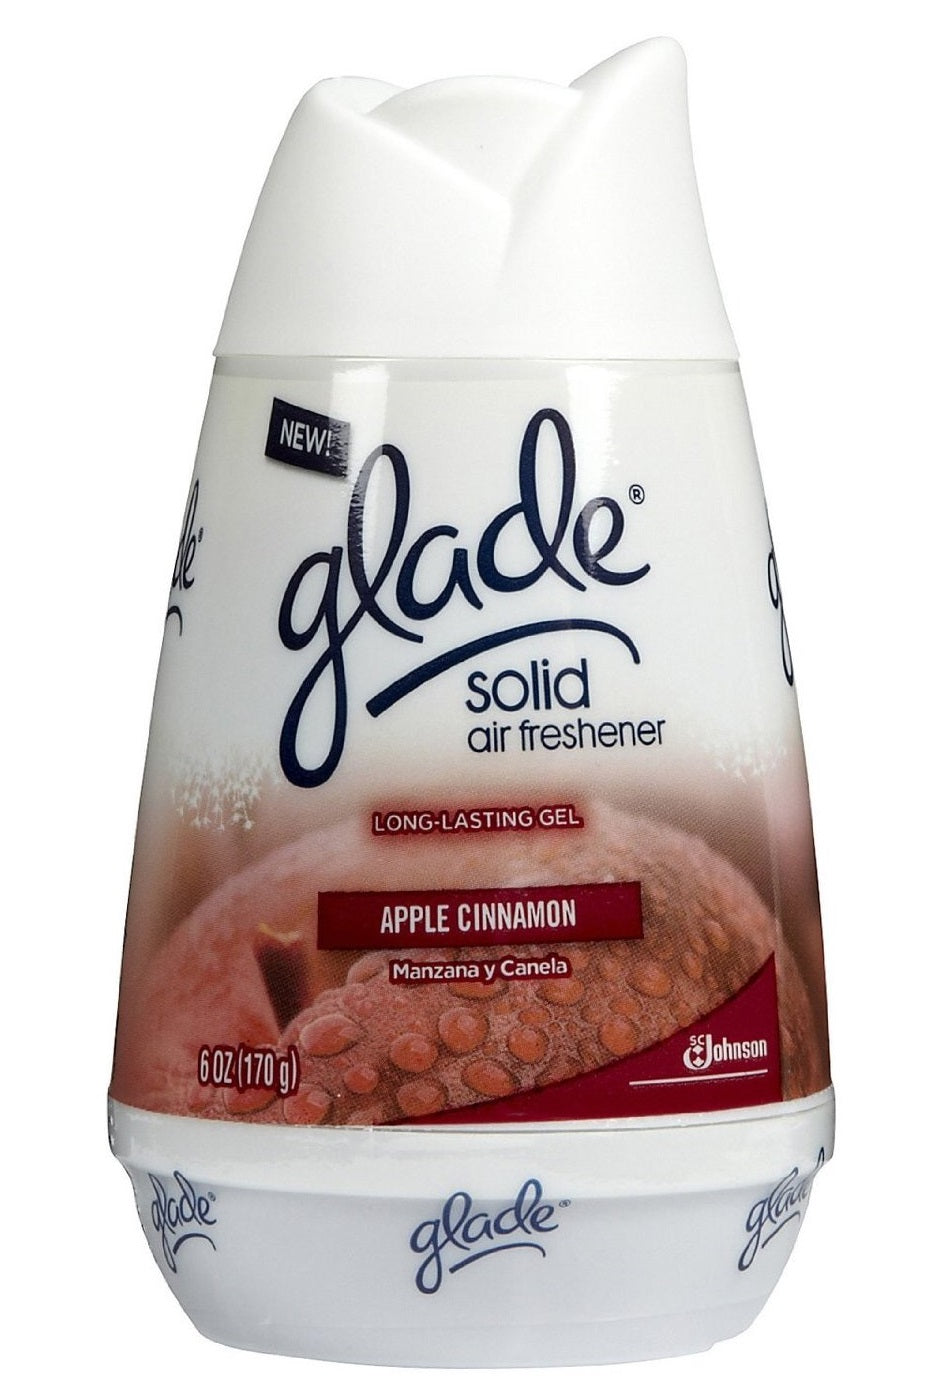 Glade 71697 Solid Air Freshener, Apple Cinnamon, 6 Oz.